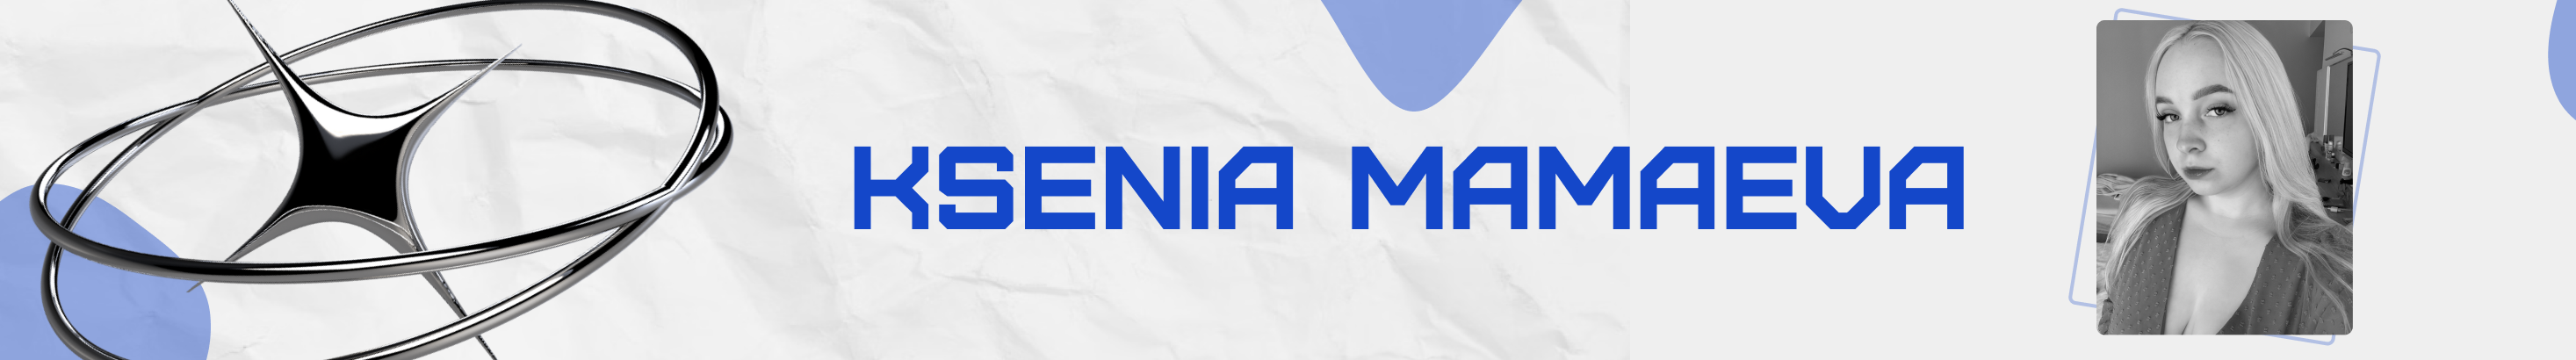 Ksenia Mamaeva's profile banner